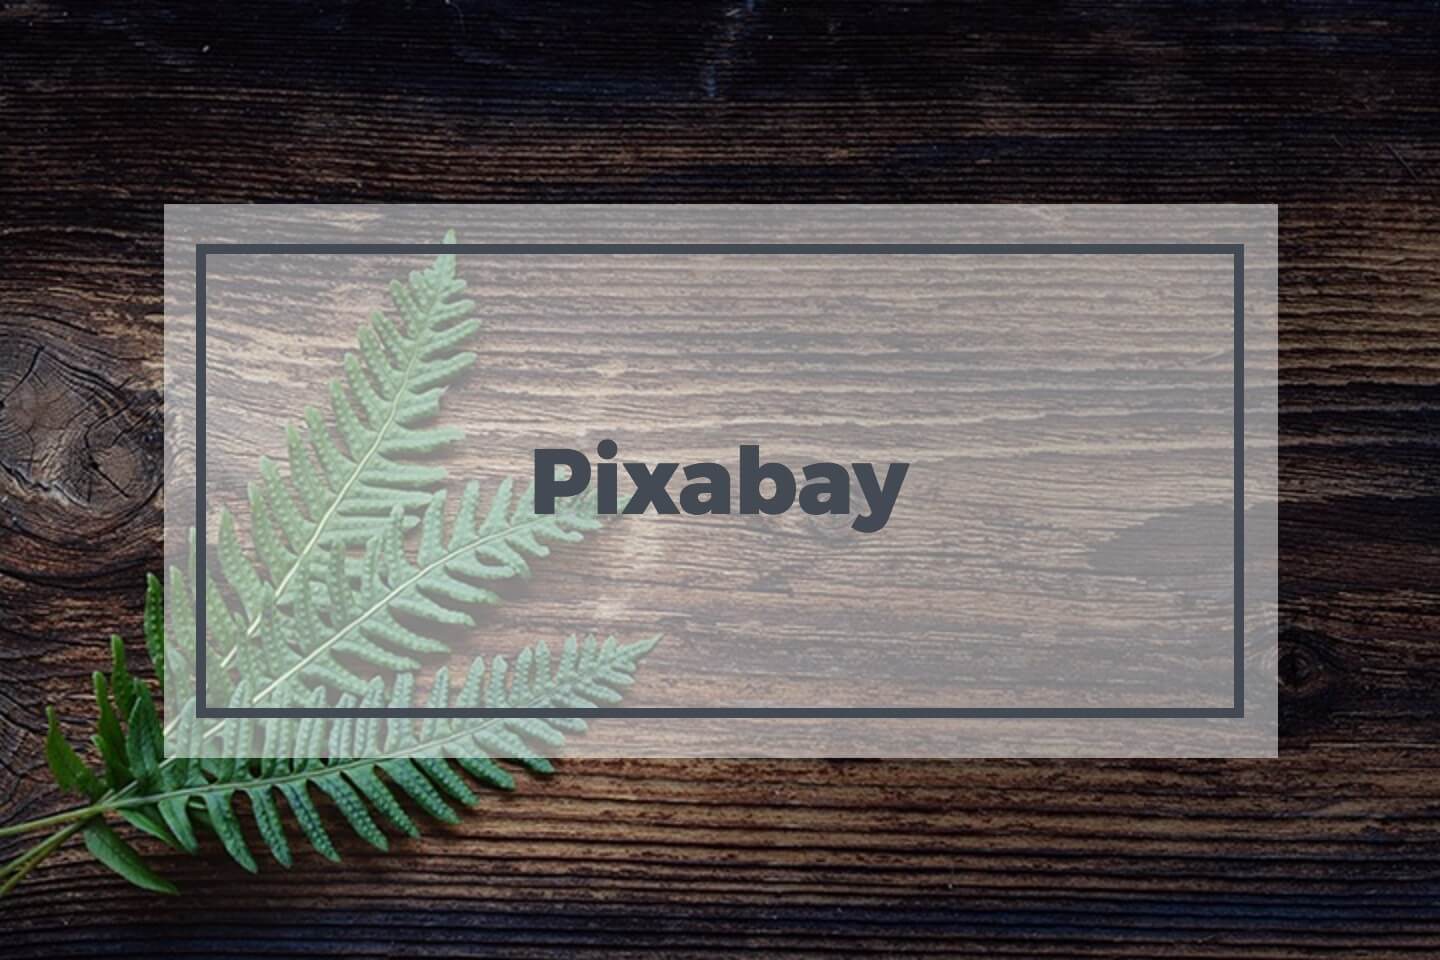 Pixabay free stock photos